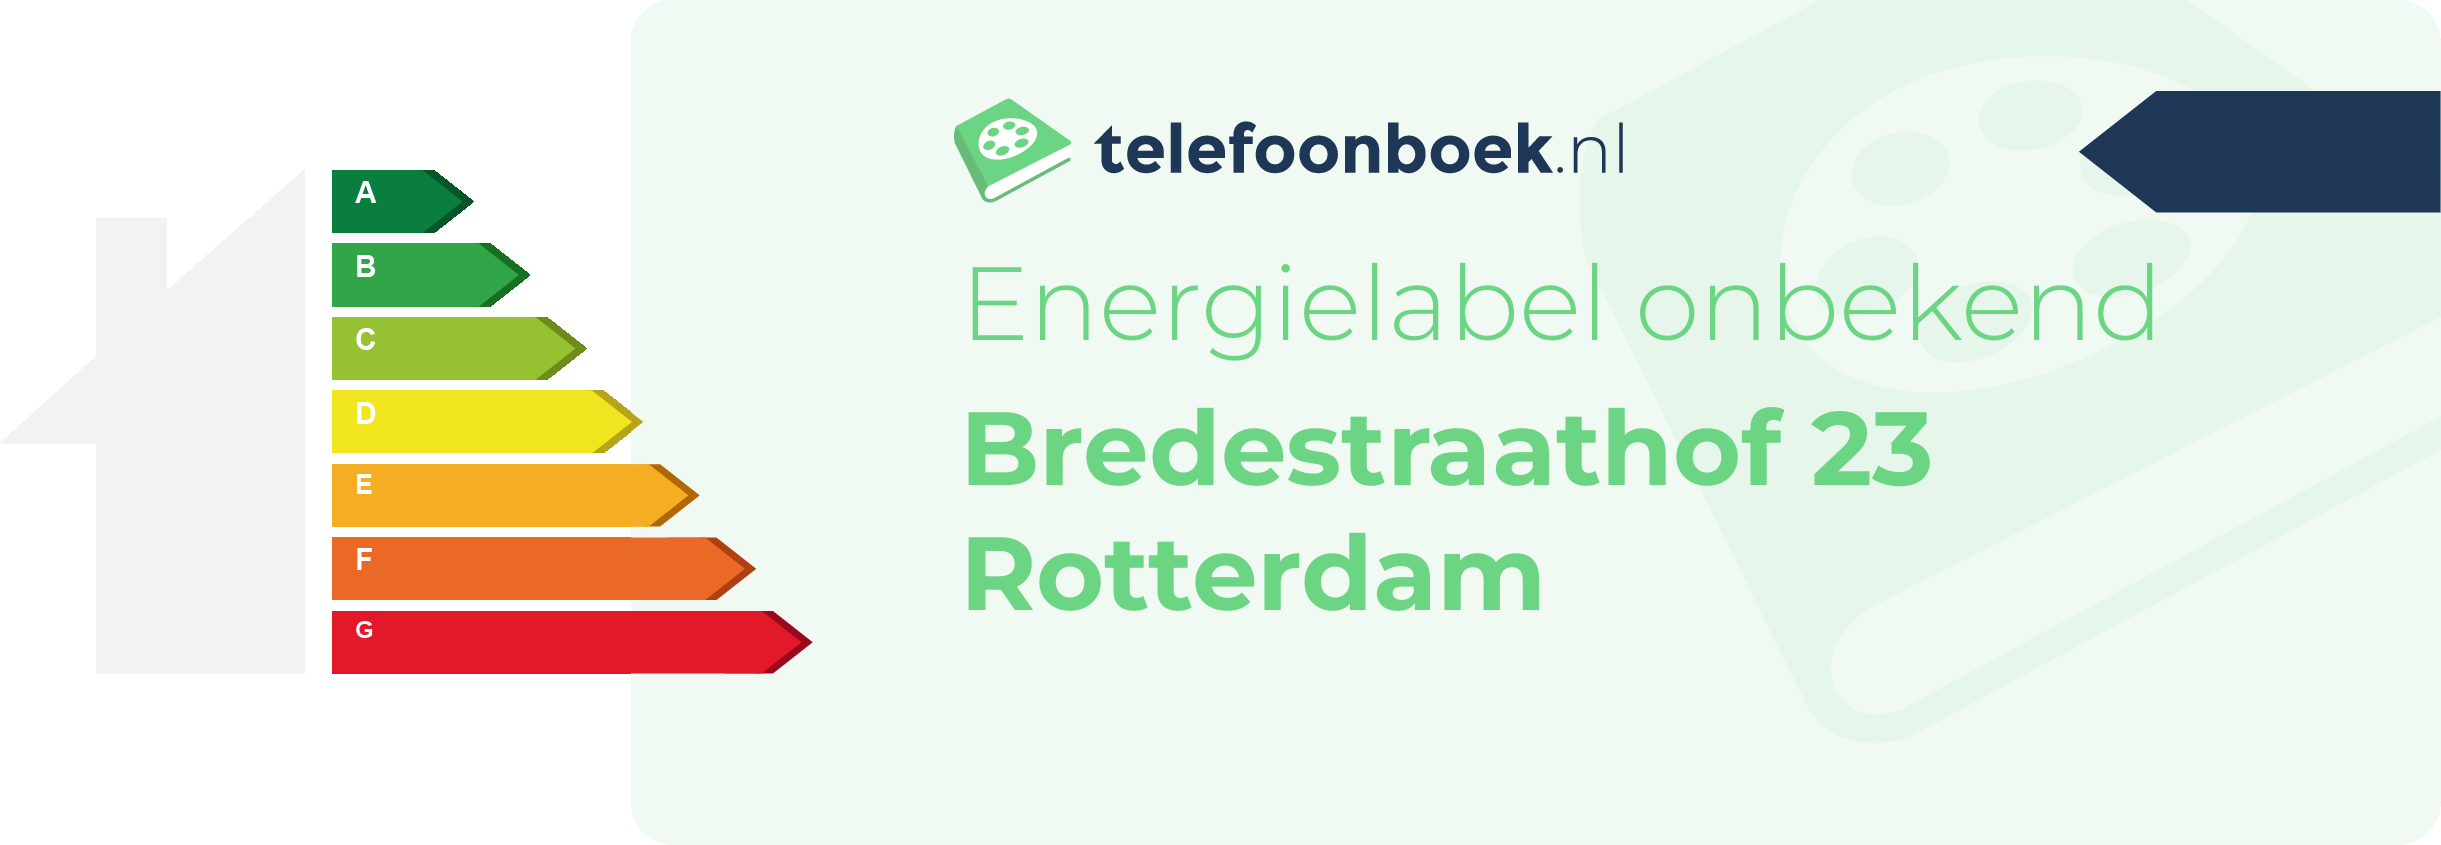 Energielabel Bredestraathof 23 Rotterdam